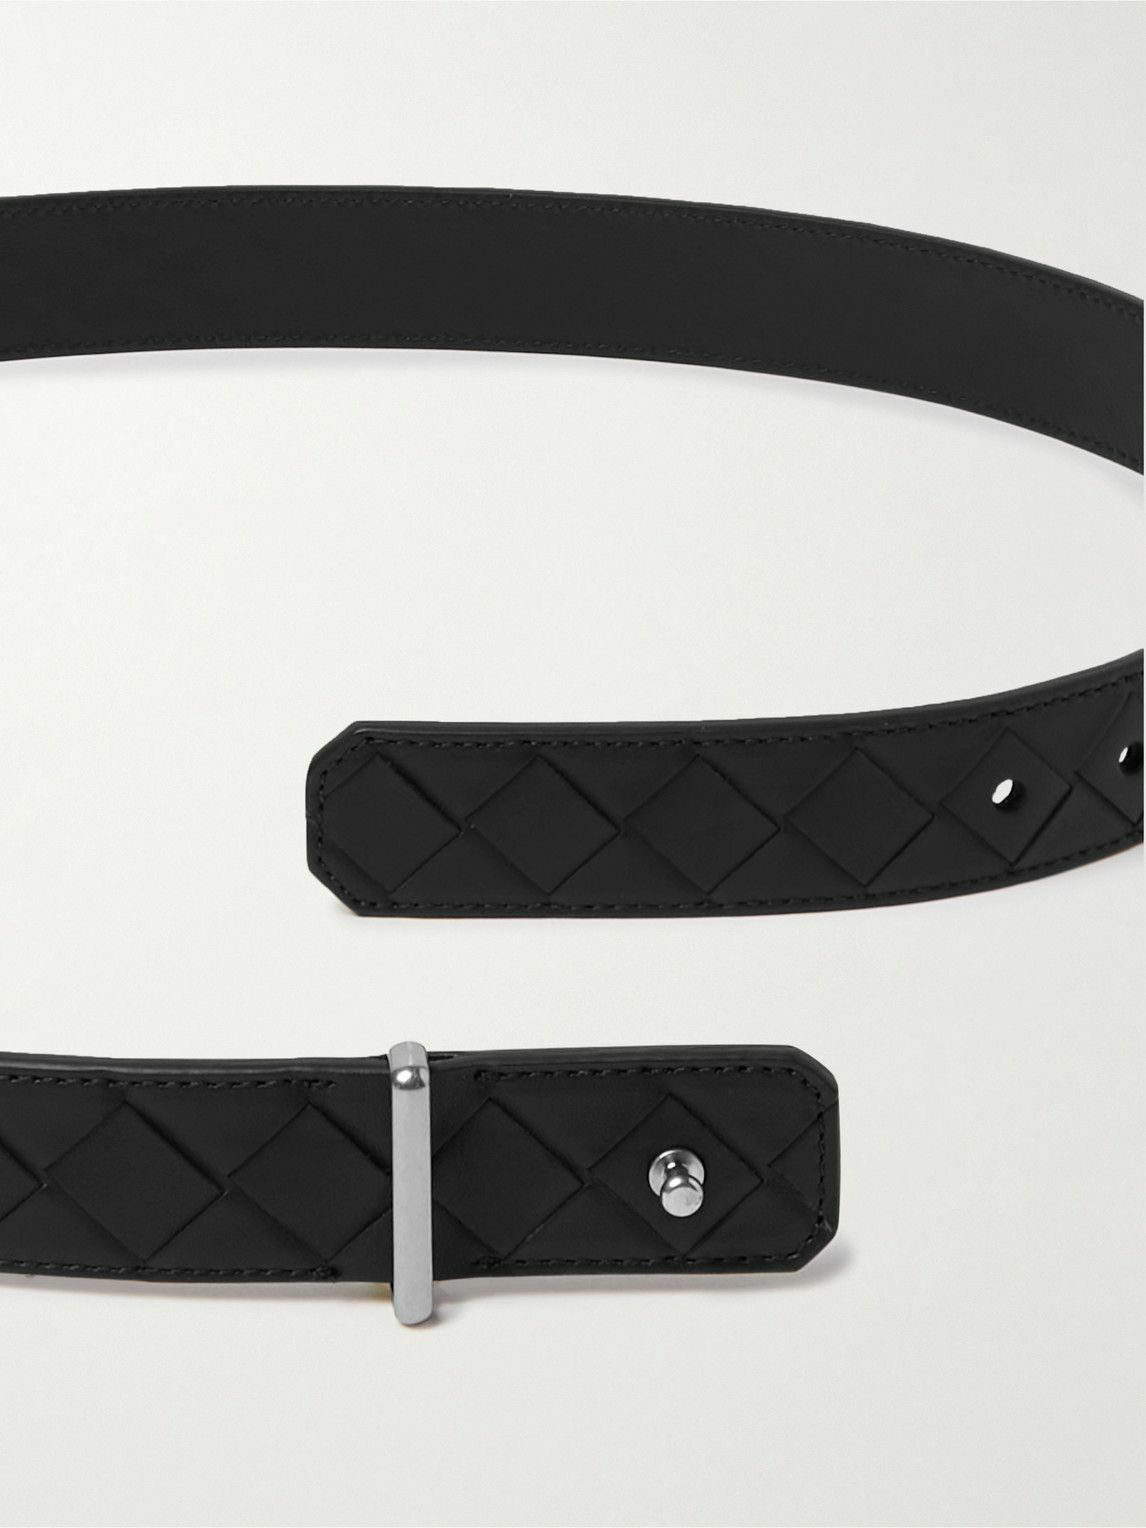 Bottega Veneta Intrecciato Leather Belt Black